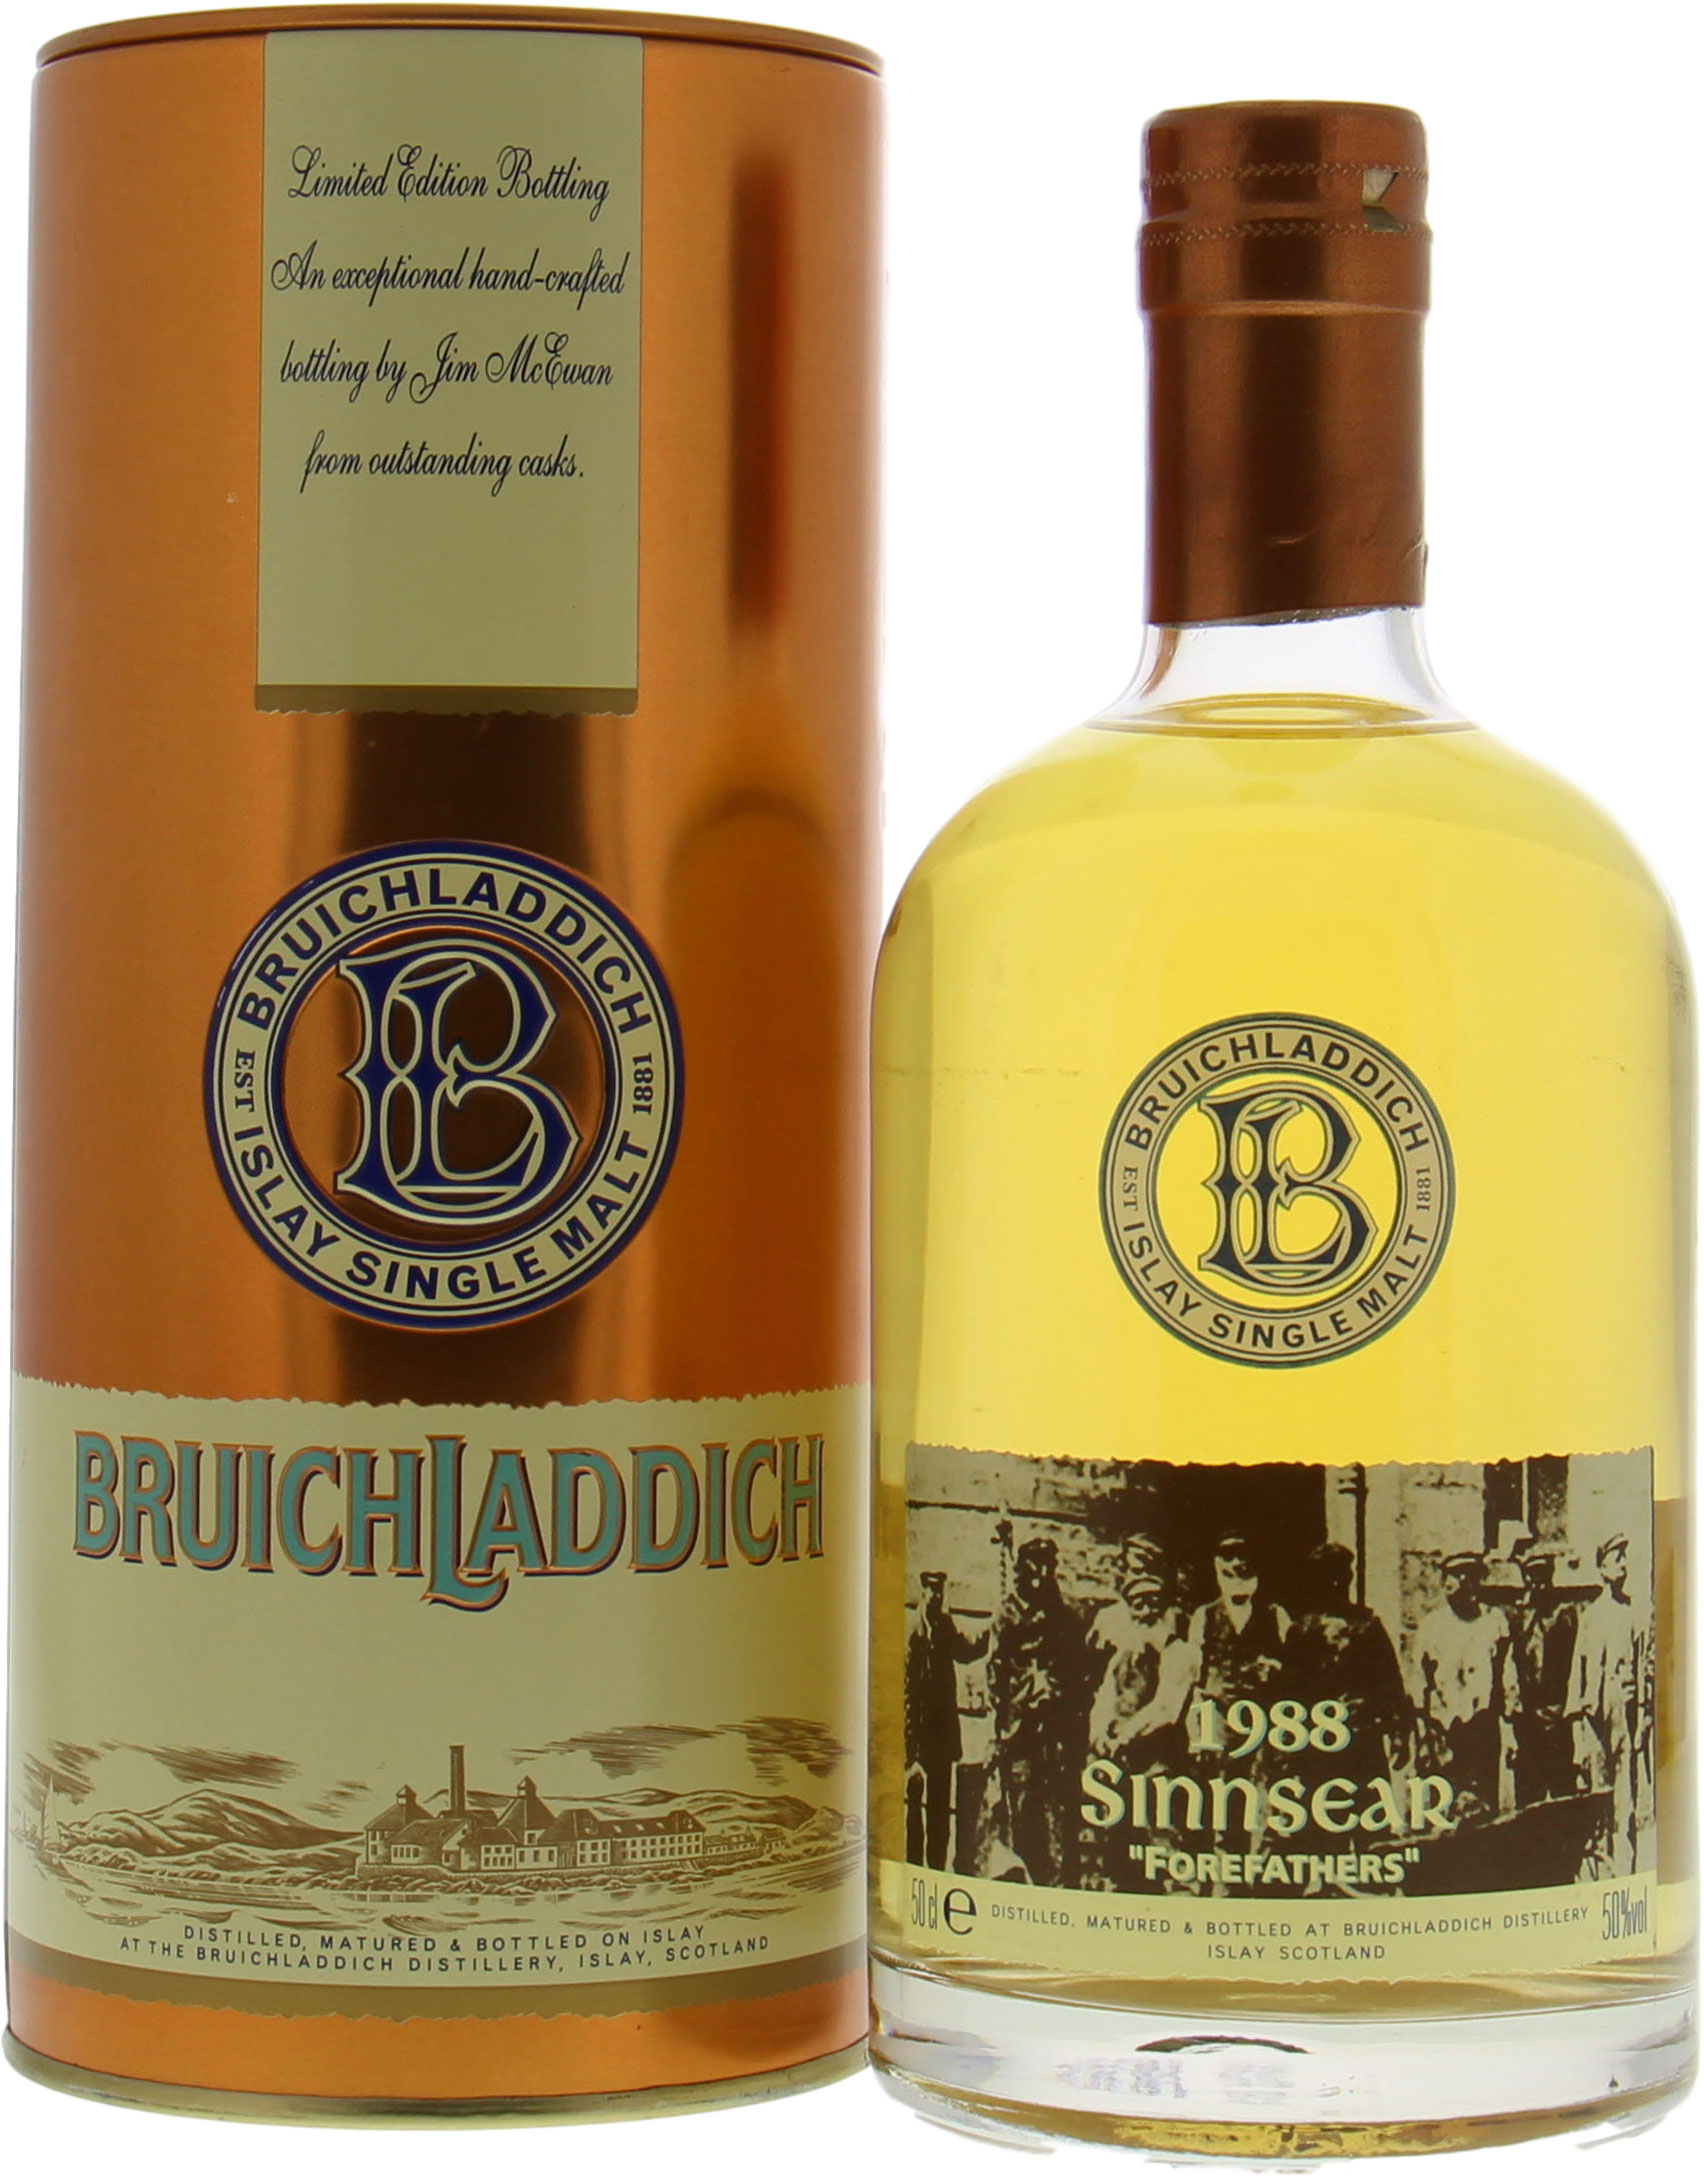 Bruichladdich - 1998 Sinnsear Forefathers 50% 1988 In Original Container